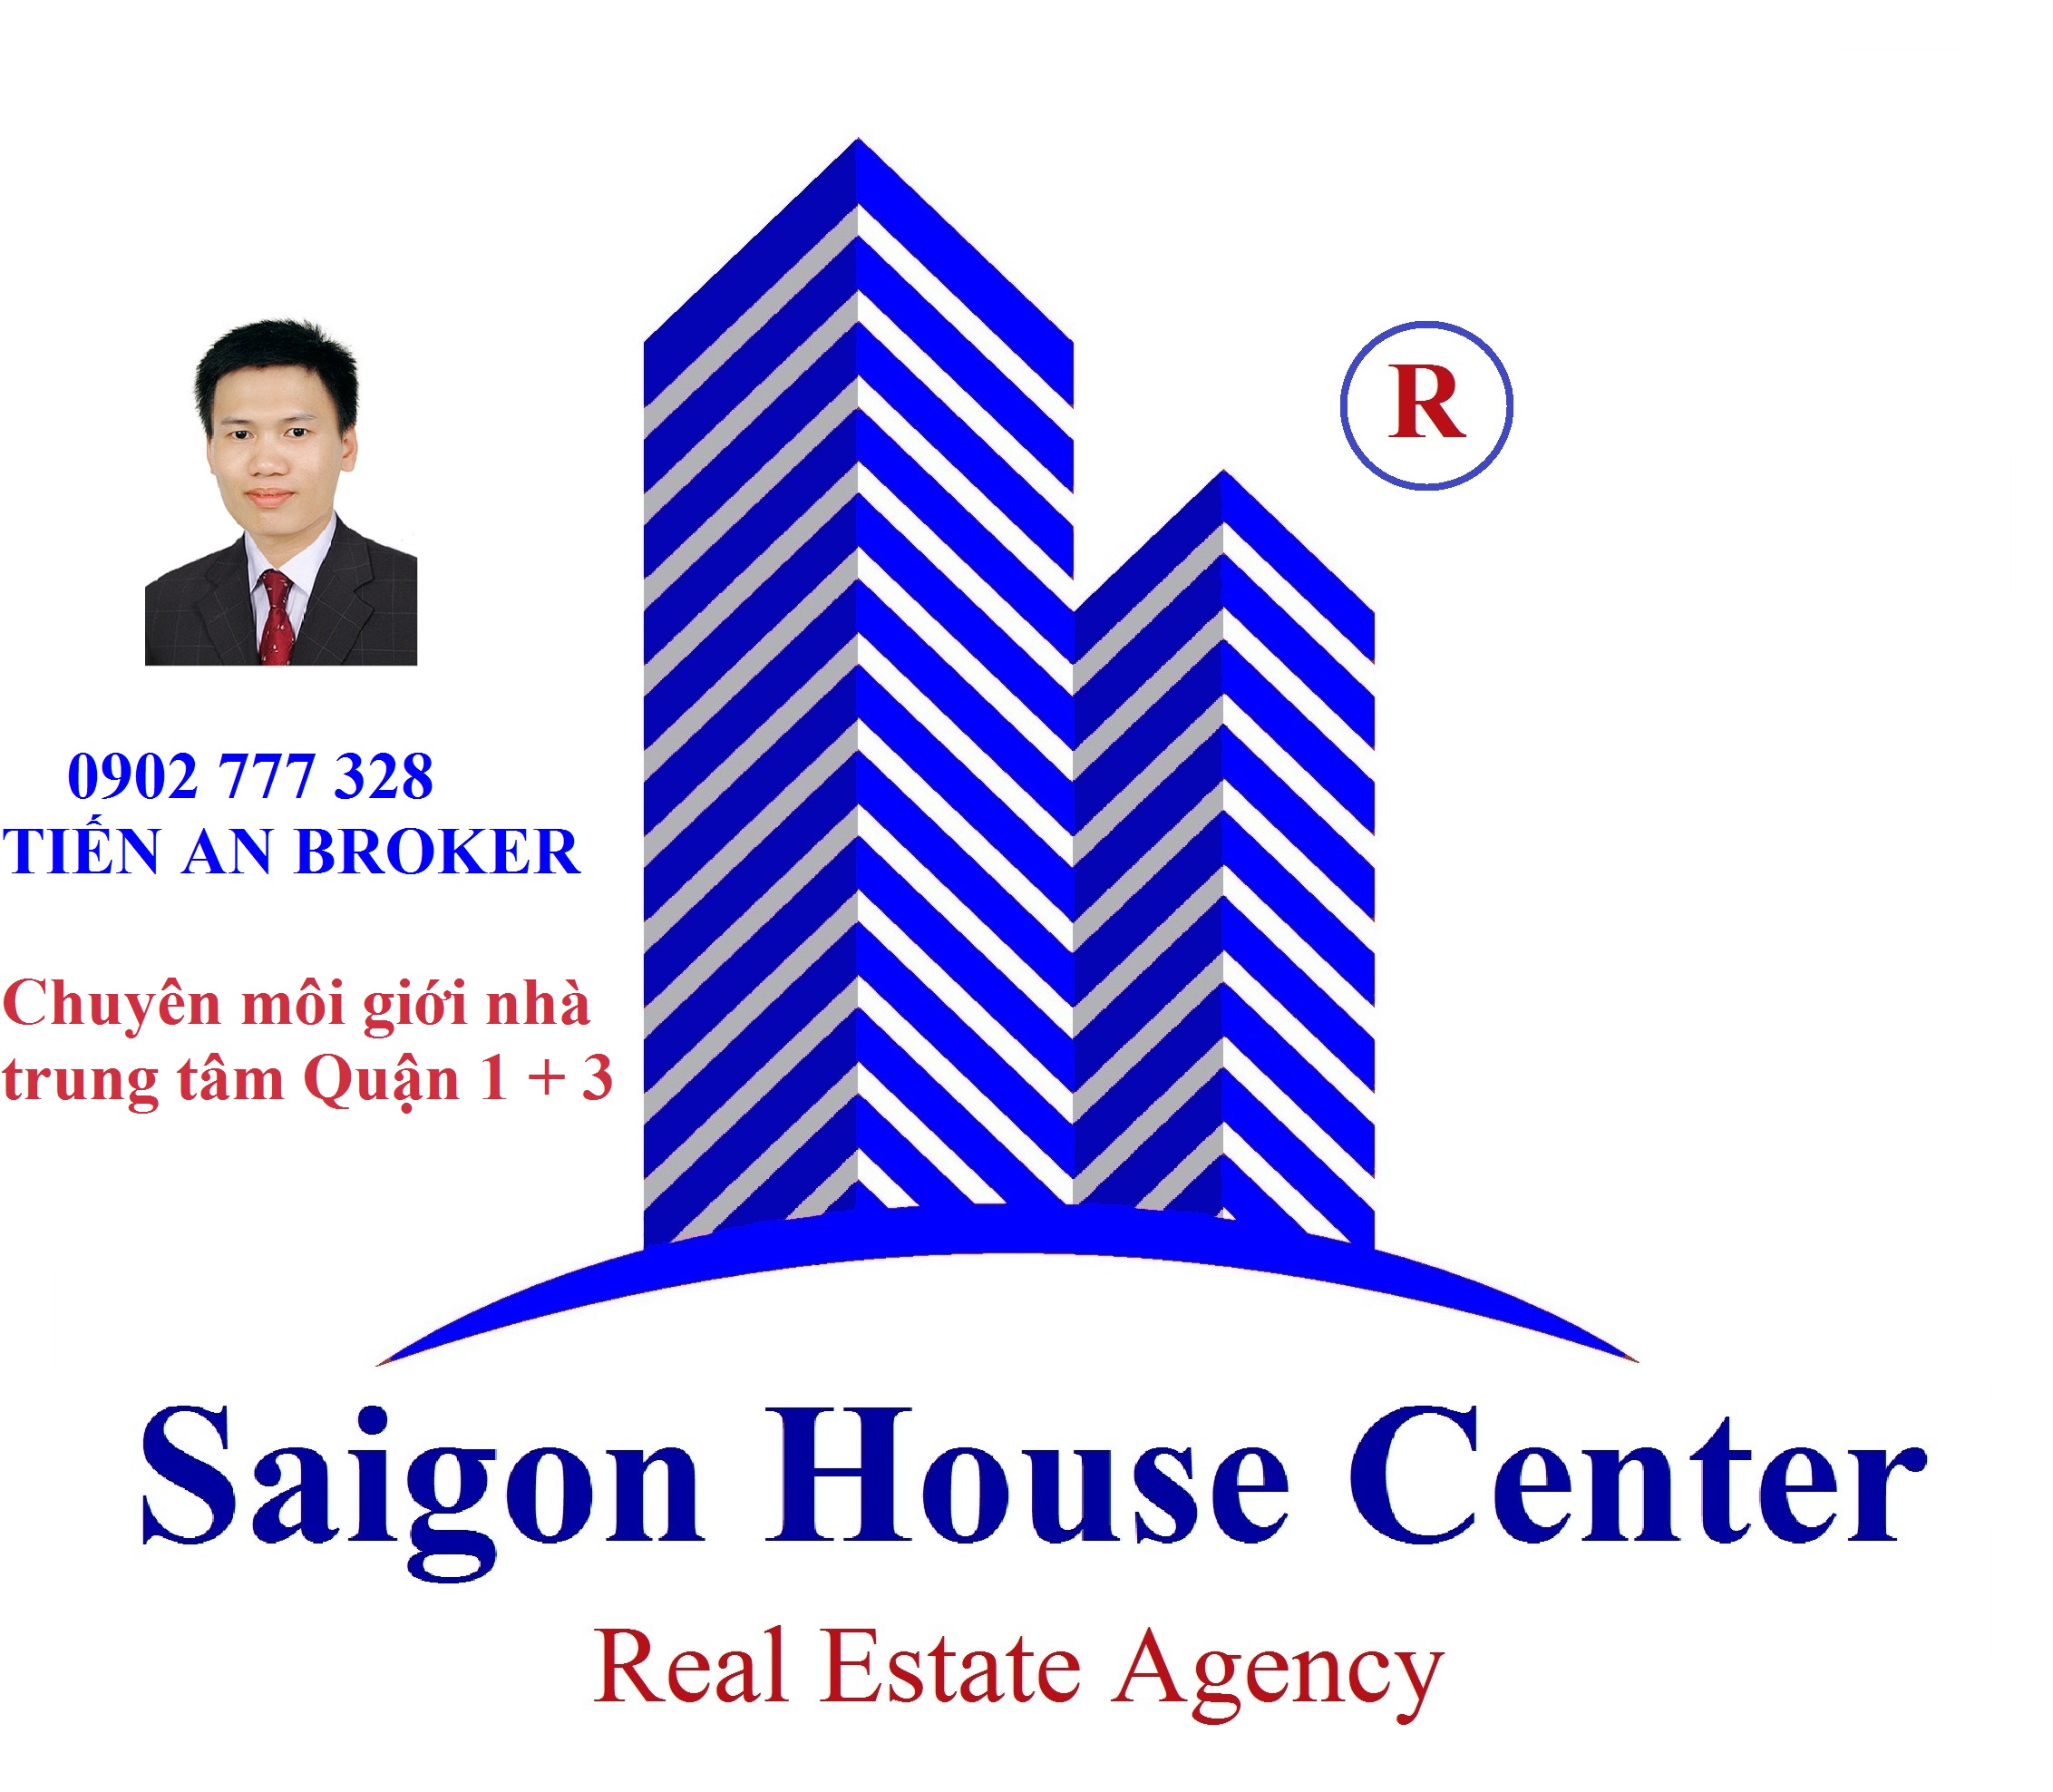 https://cdn.realtorvietnam.com/uploads/real_estate/tien-an-broker-saigon-house-center_1464251168.jpg